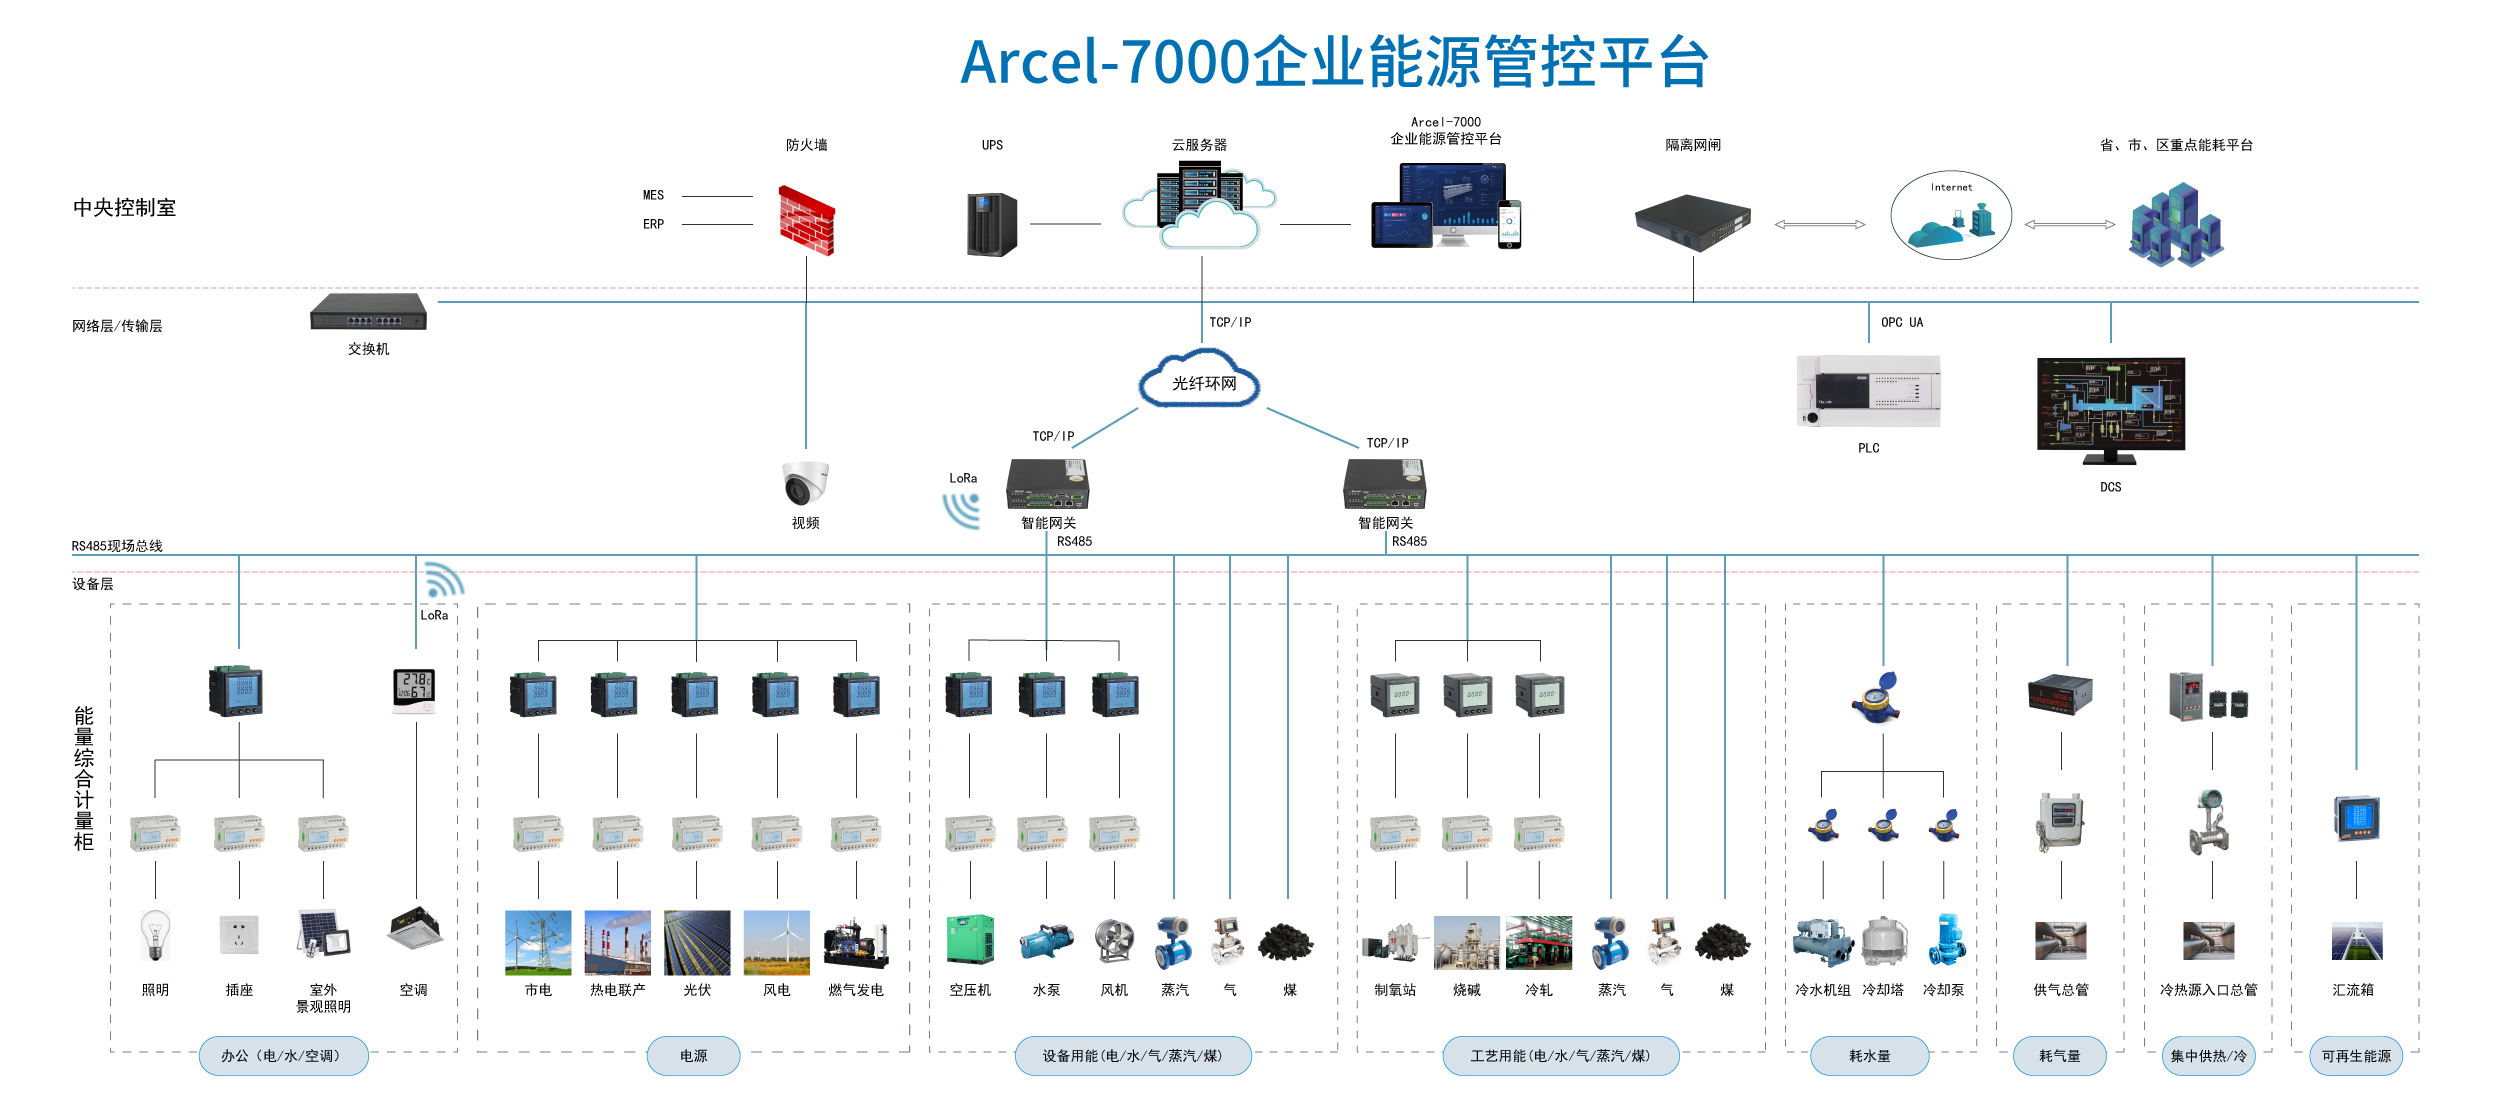 Acrel-7000企业能源管控平台在浙江春风动力股份有限公司的应用